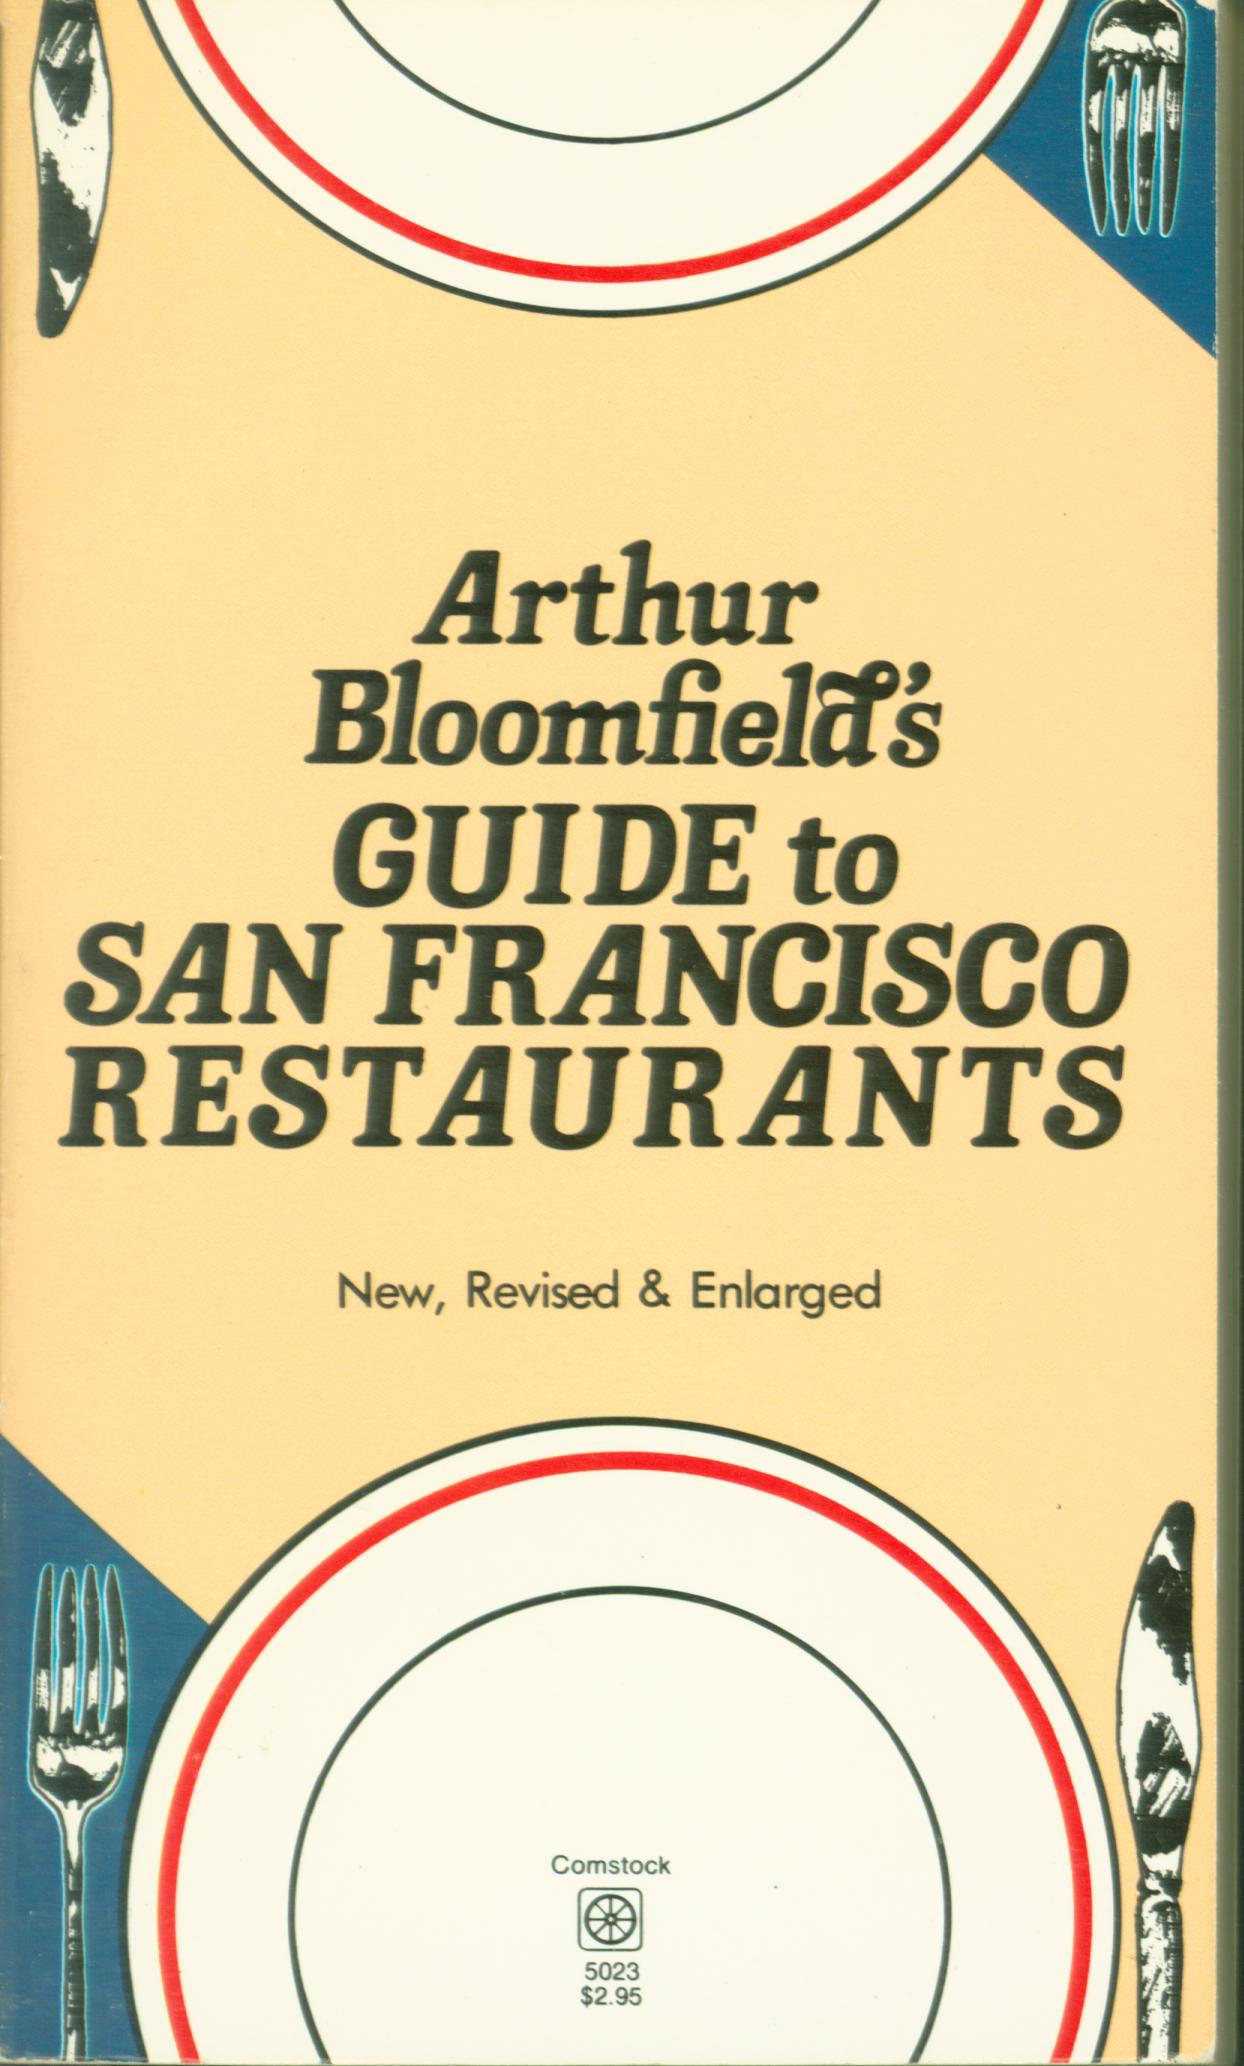 ARTHUR BLOOMFIELD'S GUIDE TO SAN FRanciSCO RESTAURANTS. by Arthur Bloomfield. 